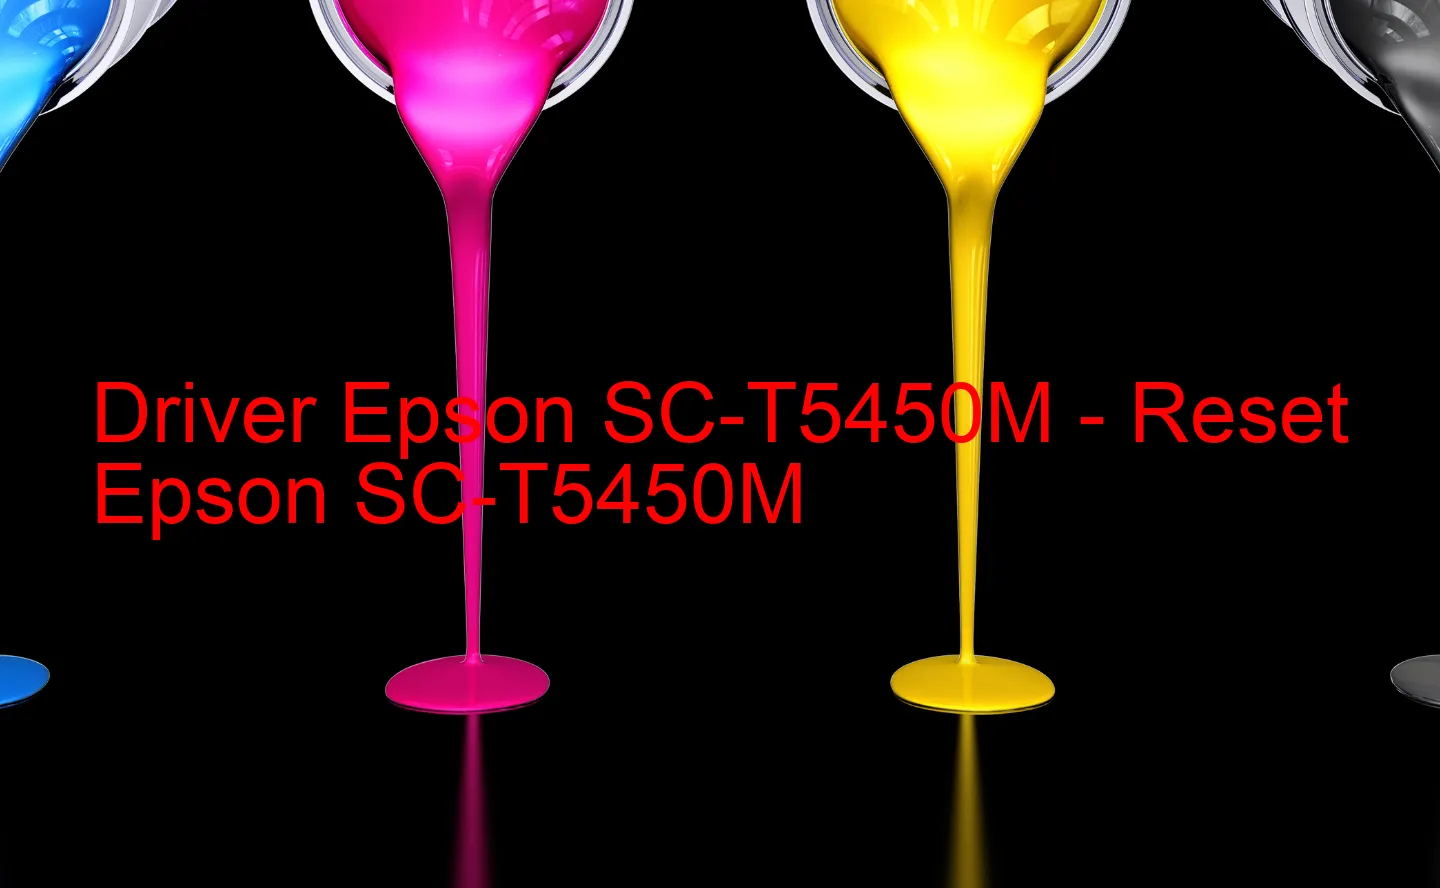 Epson SC-T5450Mのドライバー、Epson SC-T5450Mのリセットソフトウェア